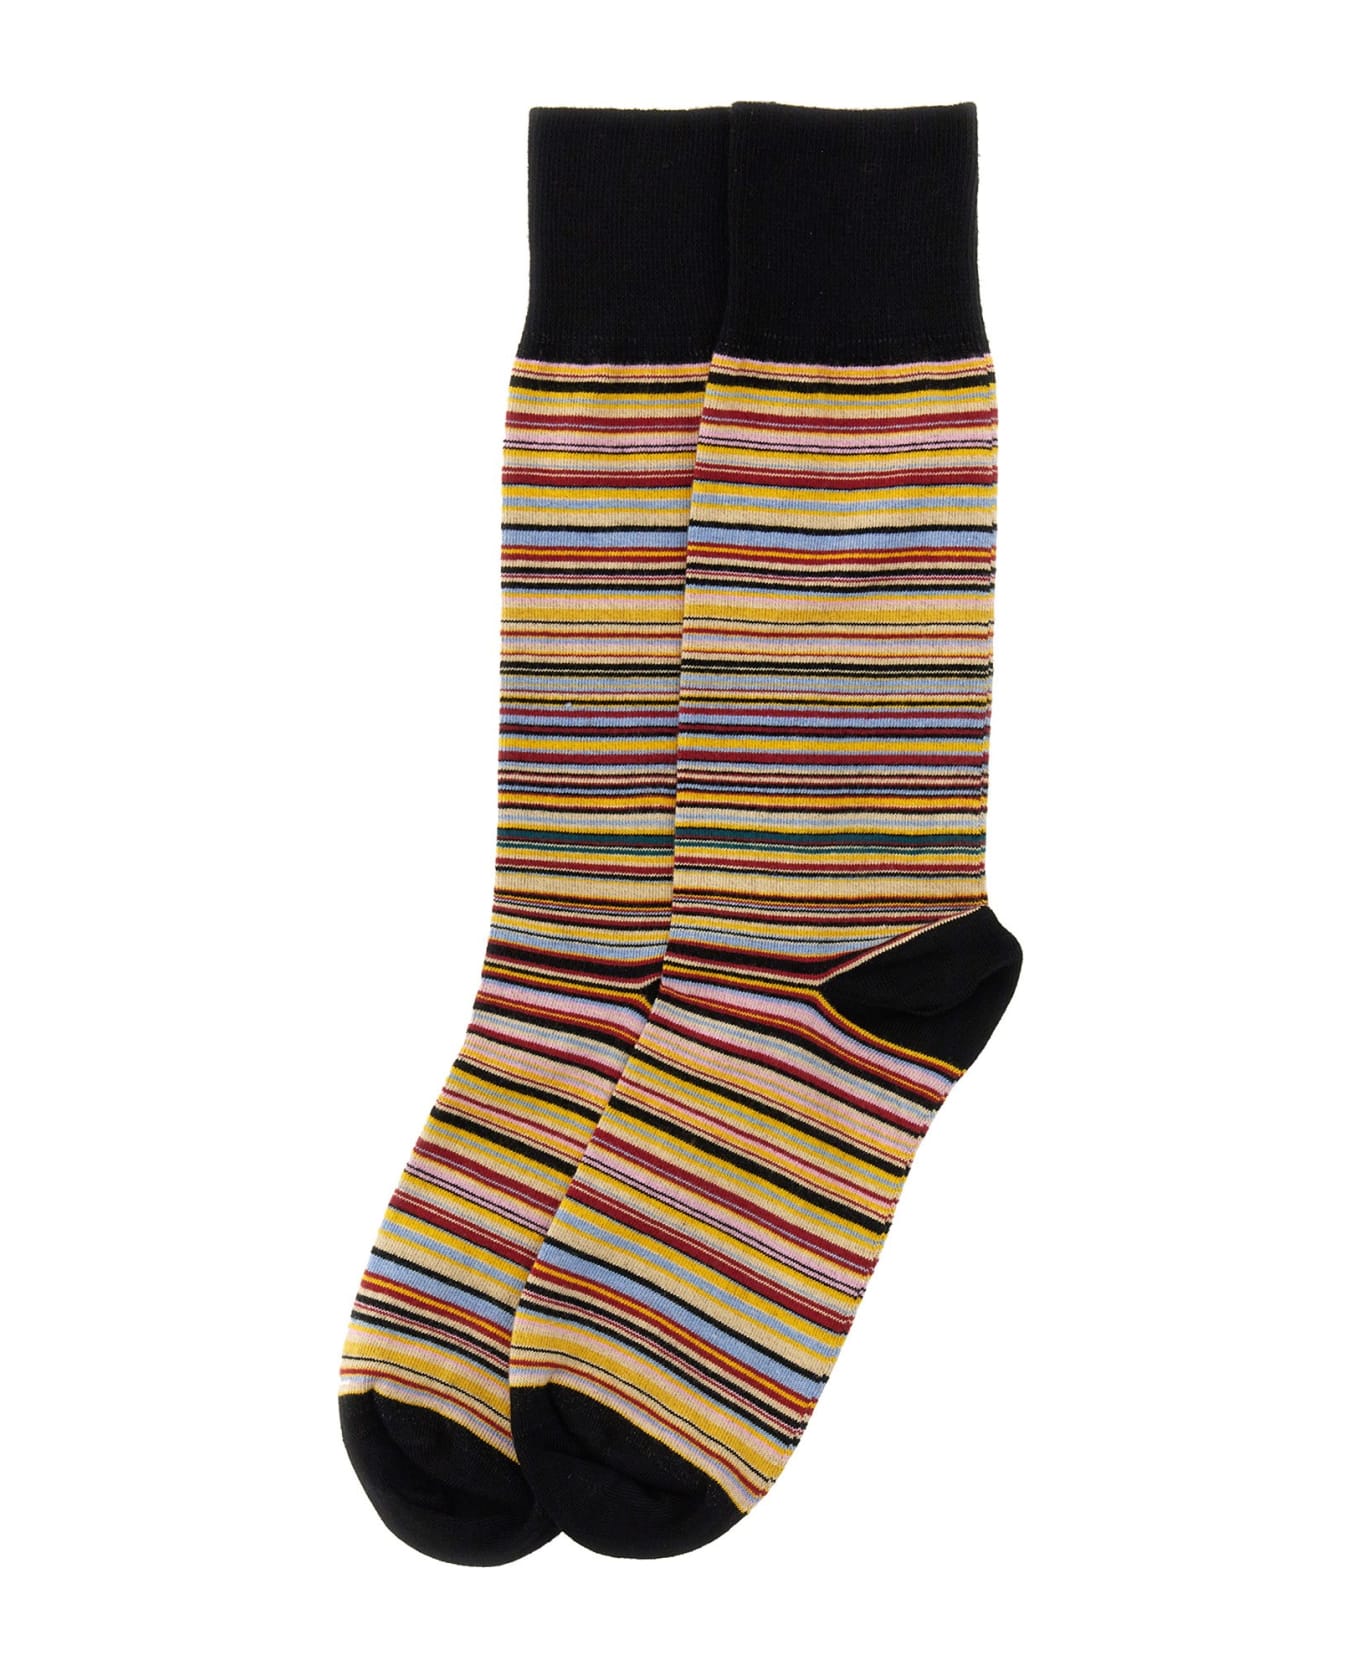 Paul Smith Striped Socks - MULTICOLOR